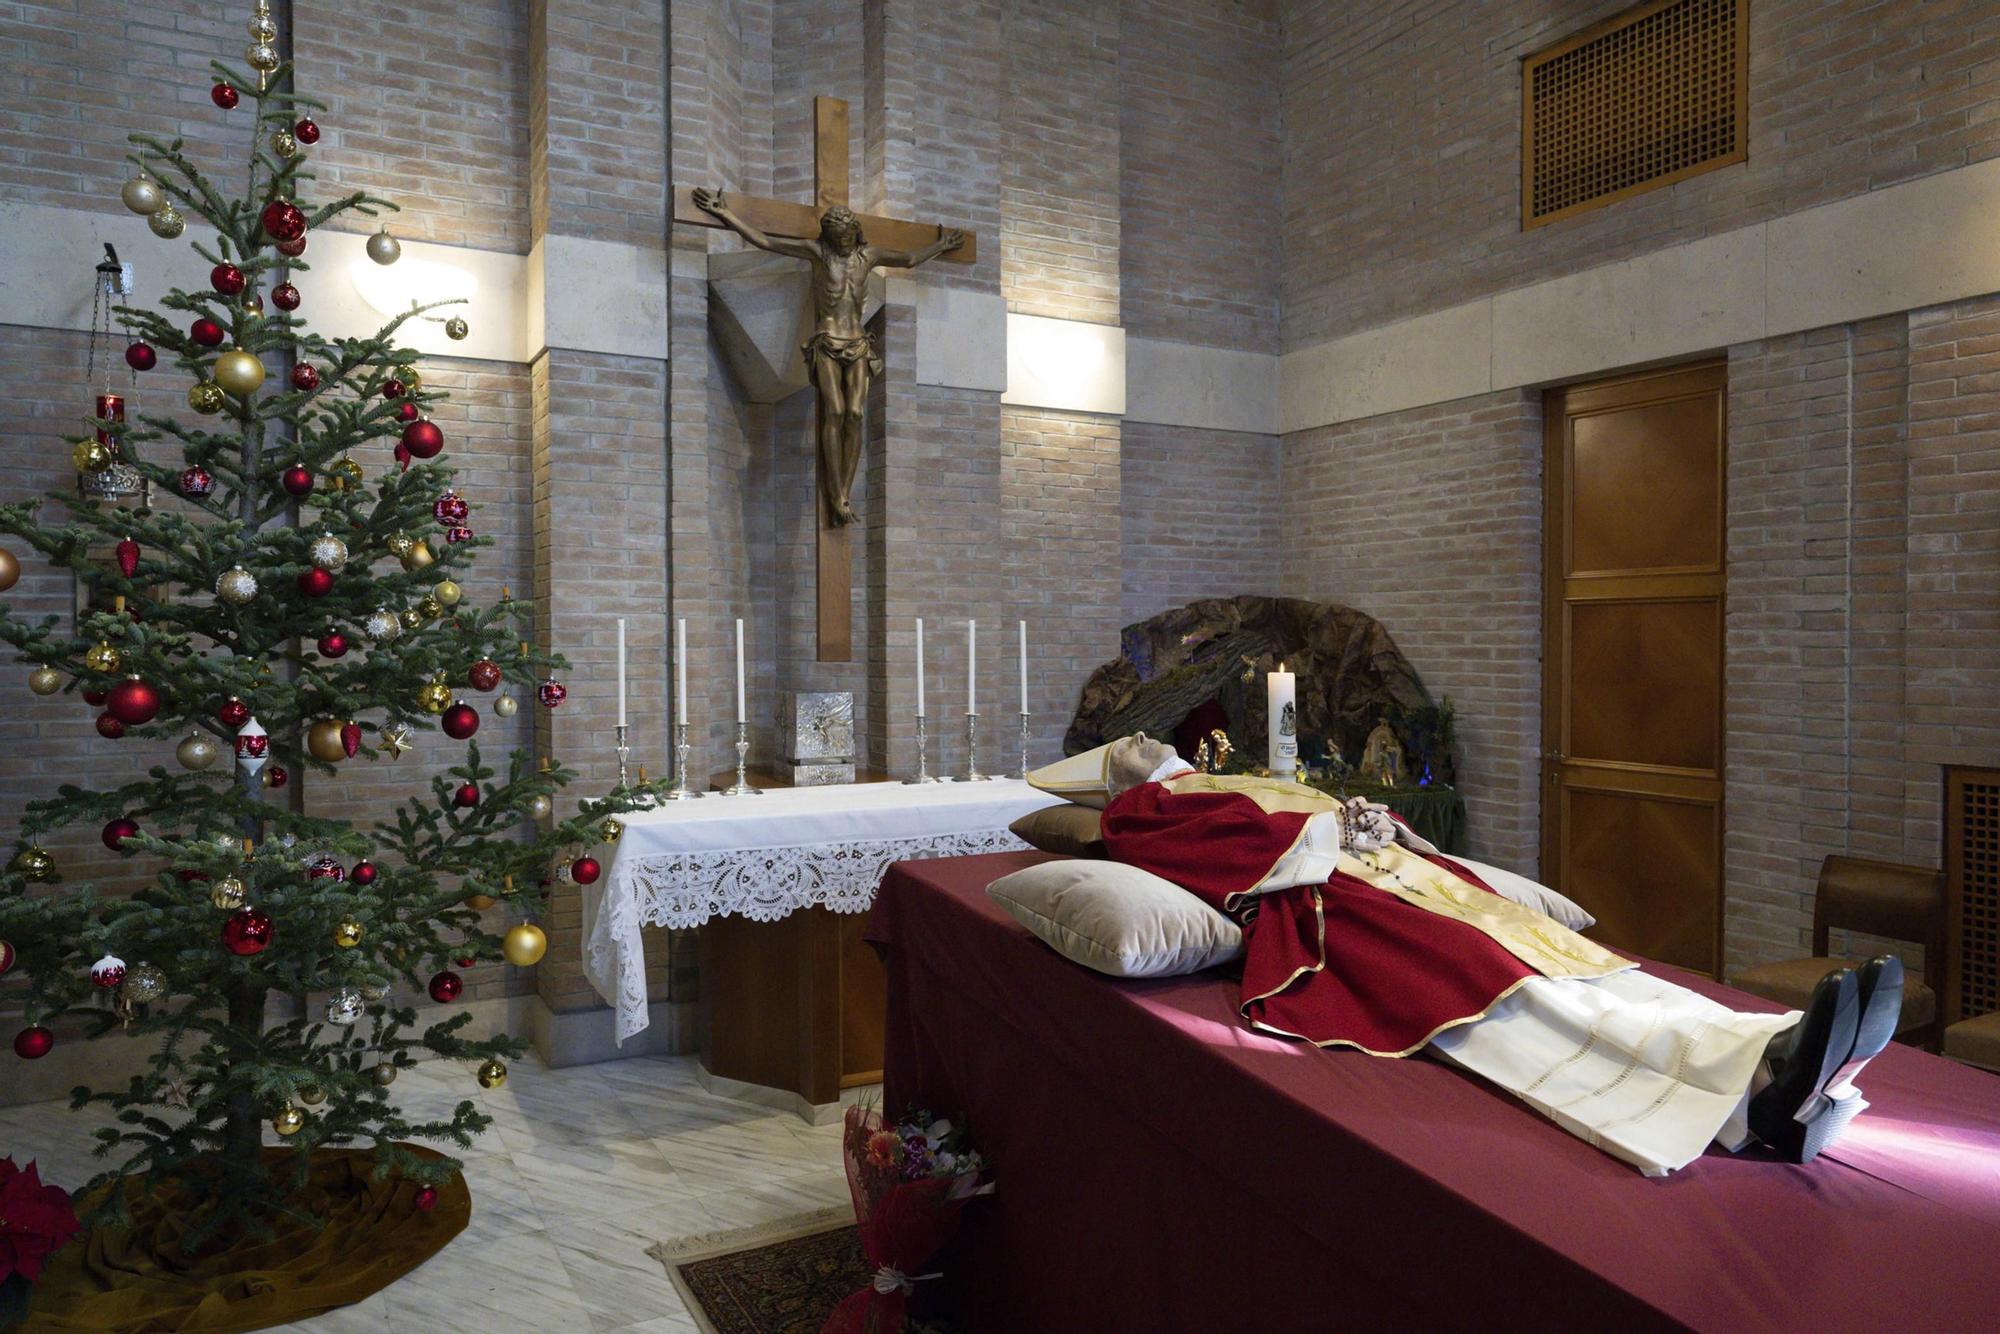 The corpse of Pope Emeritus Benedict XVI exhibited in the chapel of the Mater Ecclesiae monastery